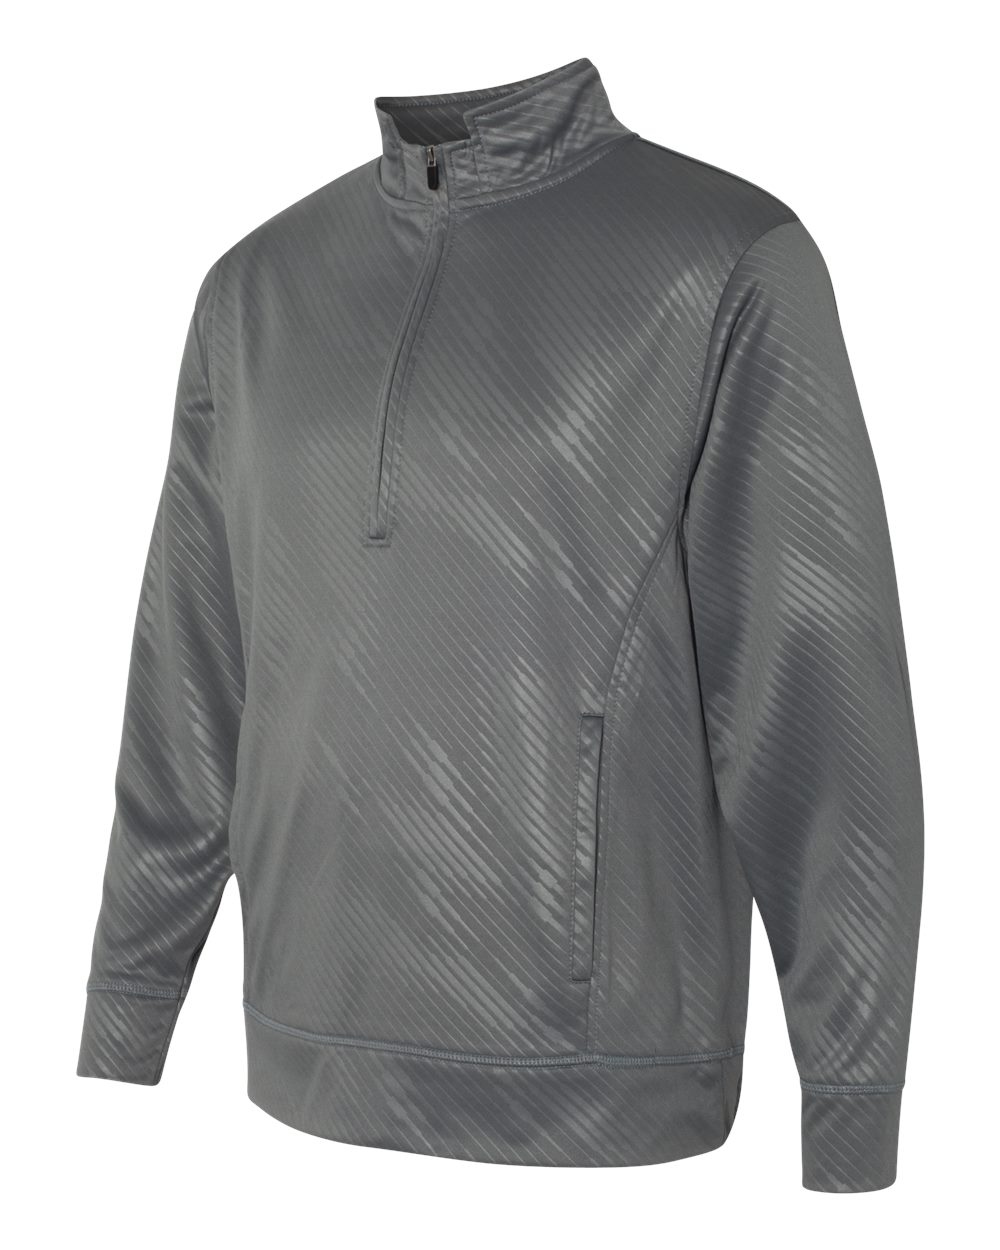 J. America 8669 - Volt Polyester Quarter-Zip Sweatshirt